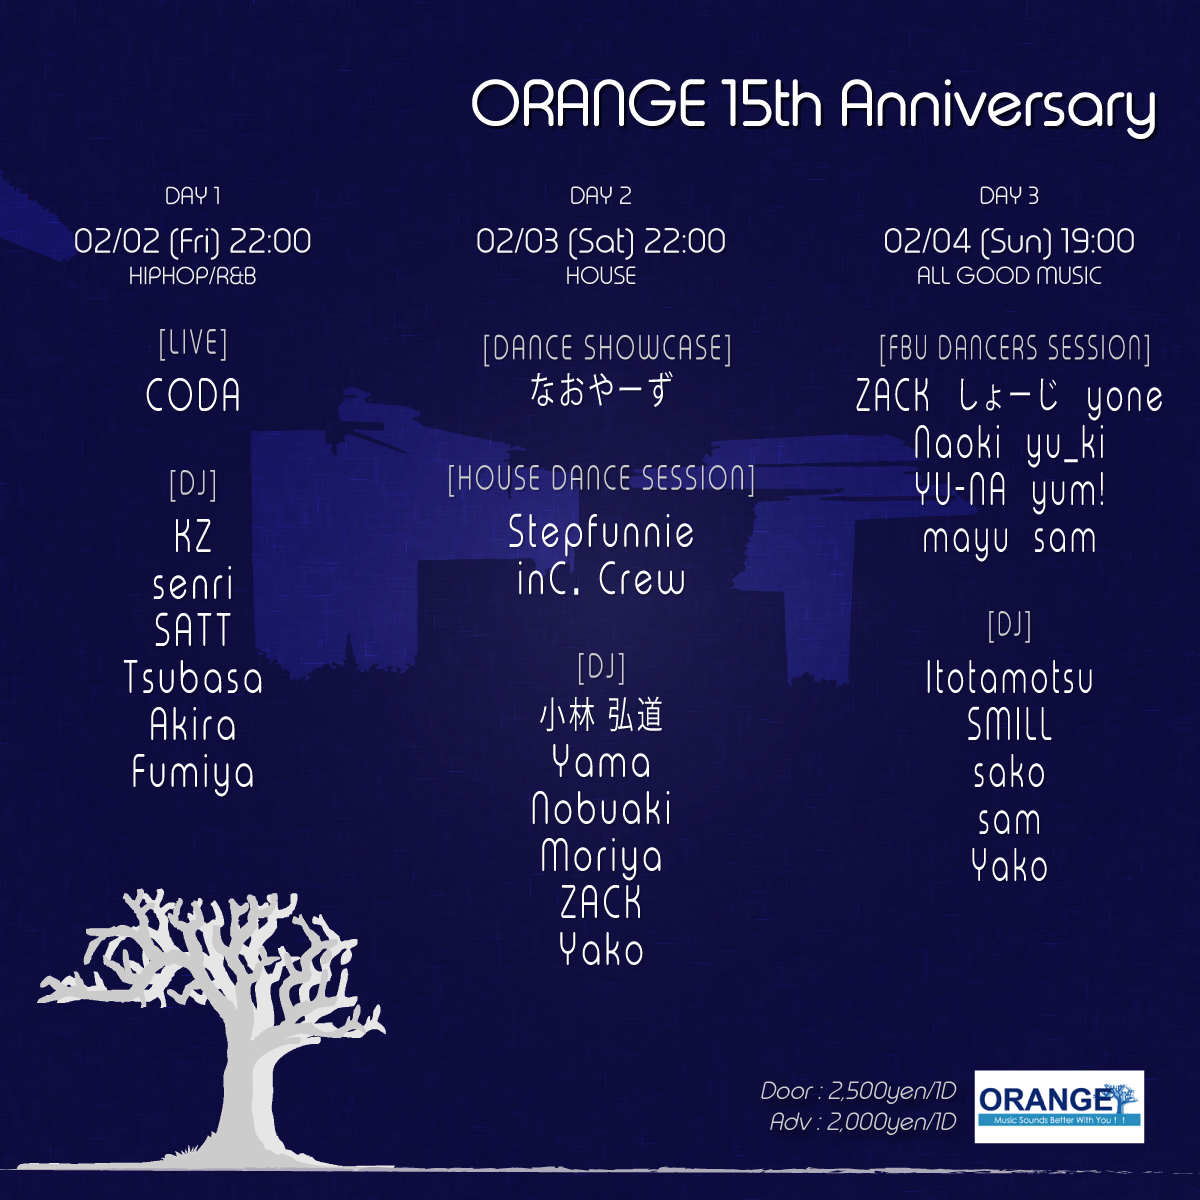 ORANGE 15th Anniversary Party Day 1